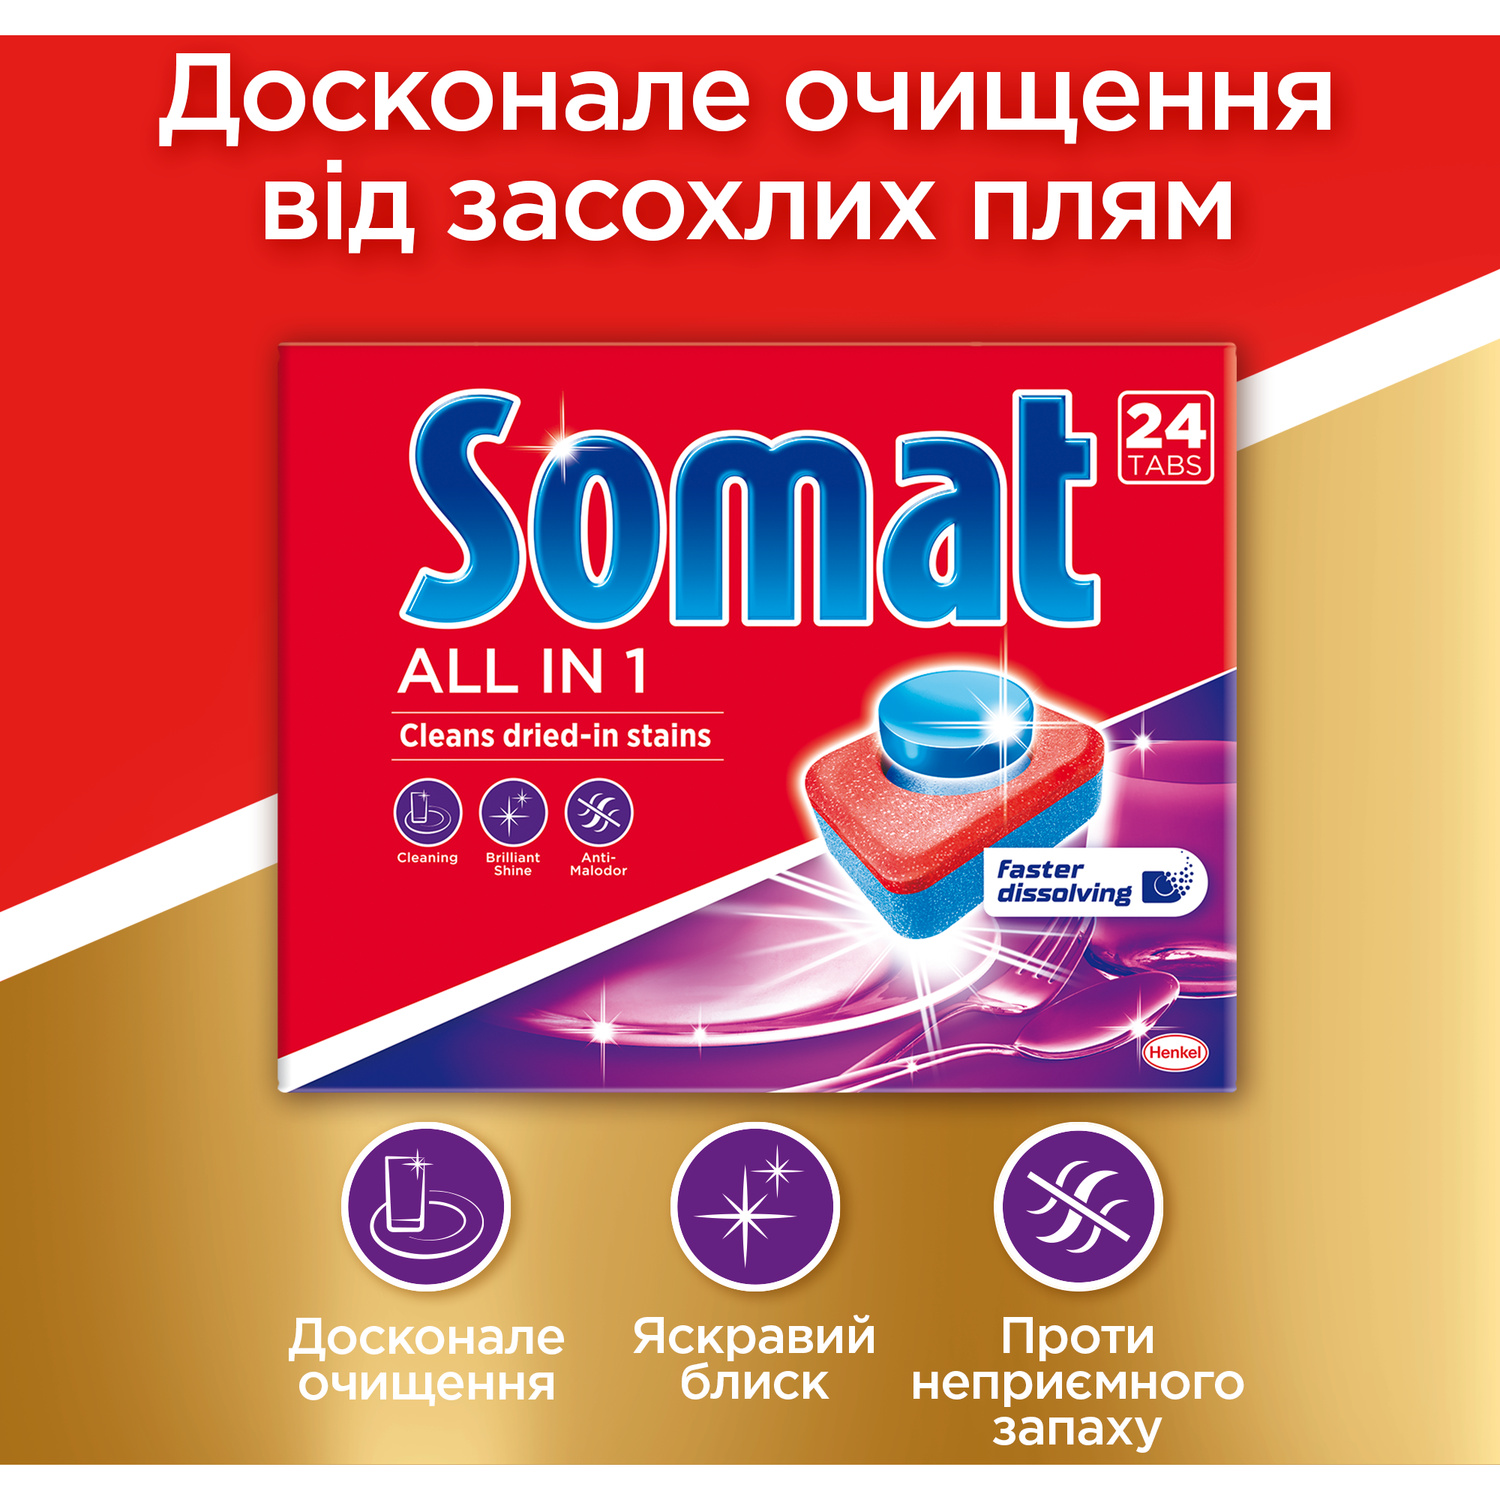 Капсули для посудомийної машини Somat Exellence All in one Все в 1 24 таблетки - фото 3